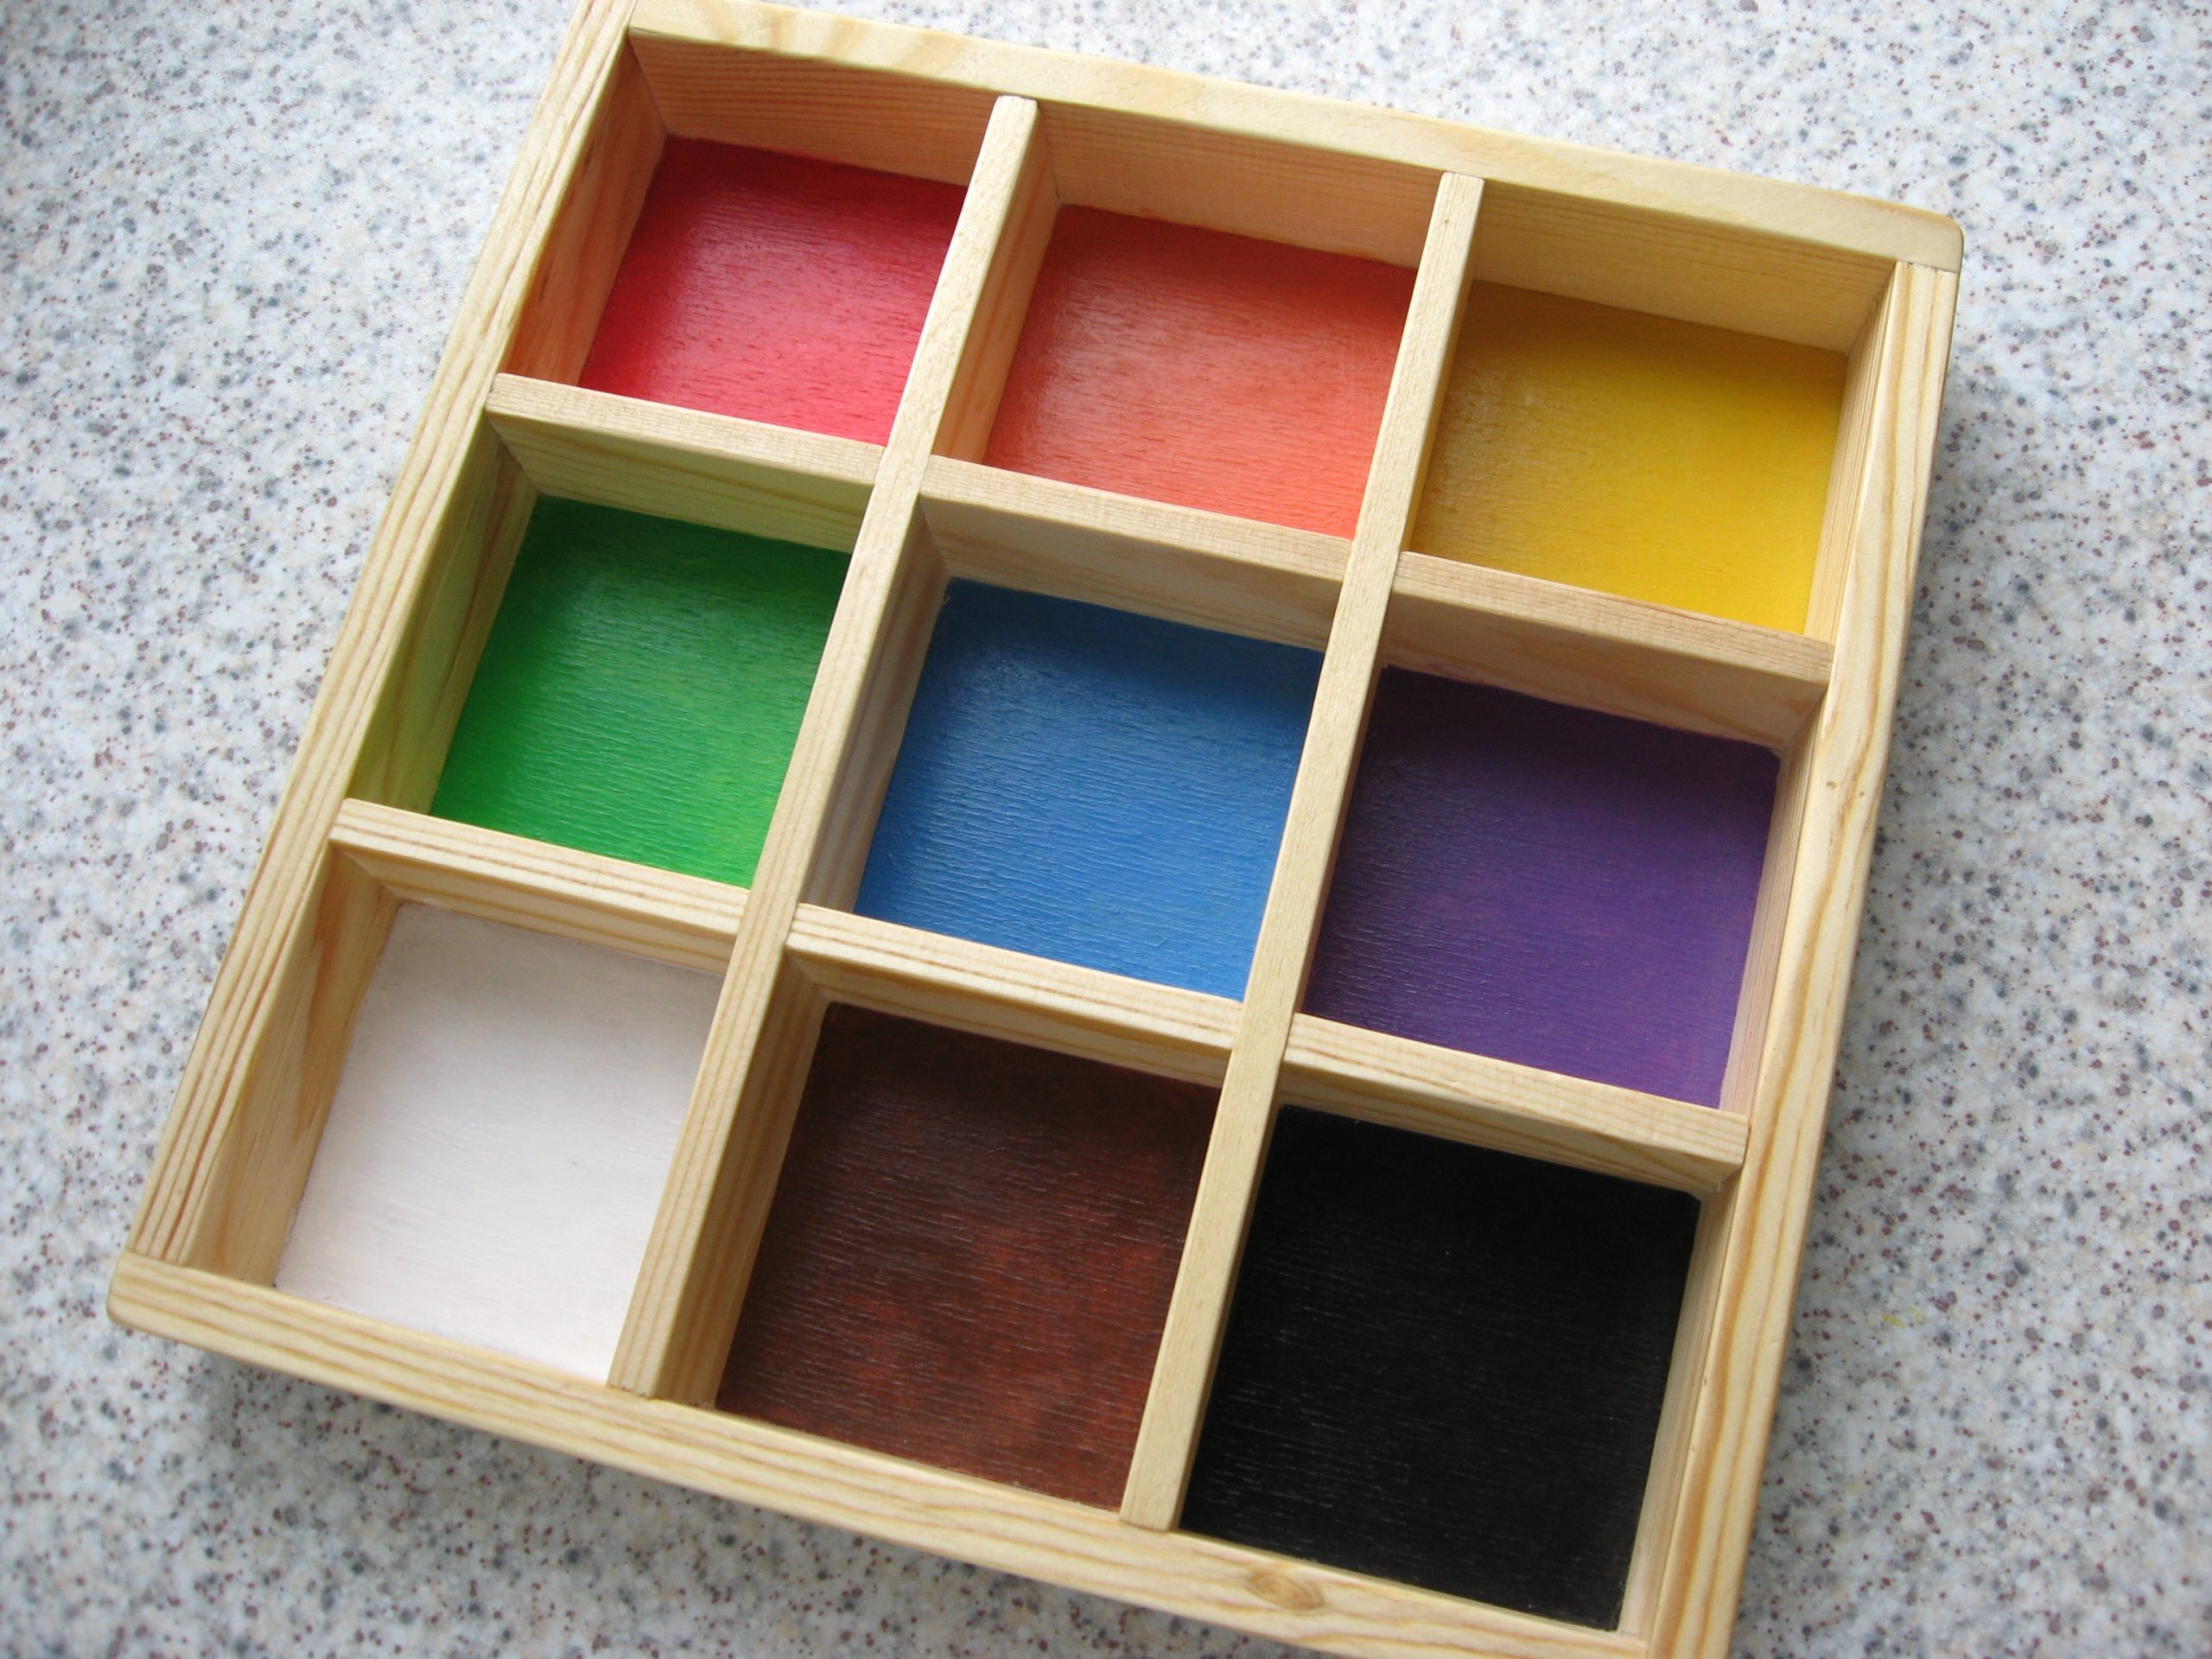 Wooden Color Sorting tray - Toddler preschool activity